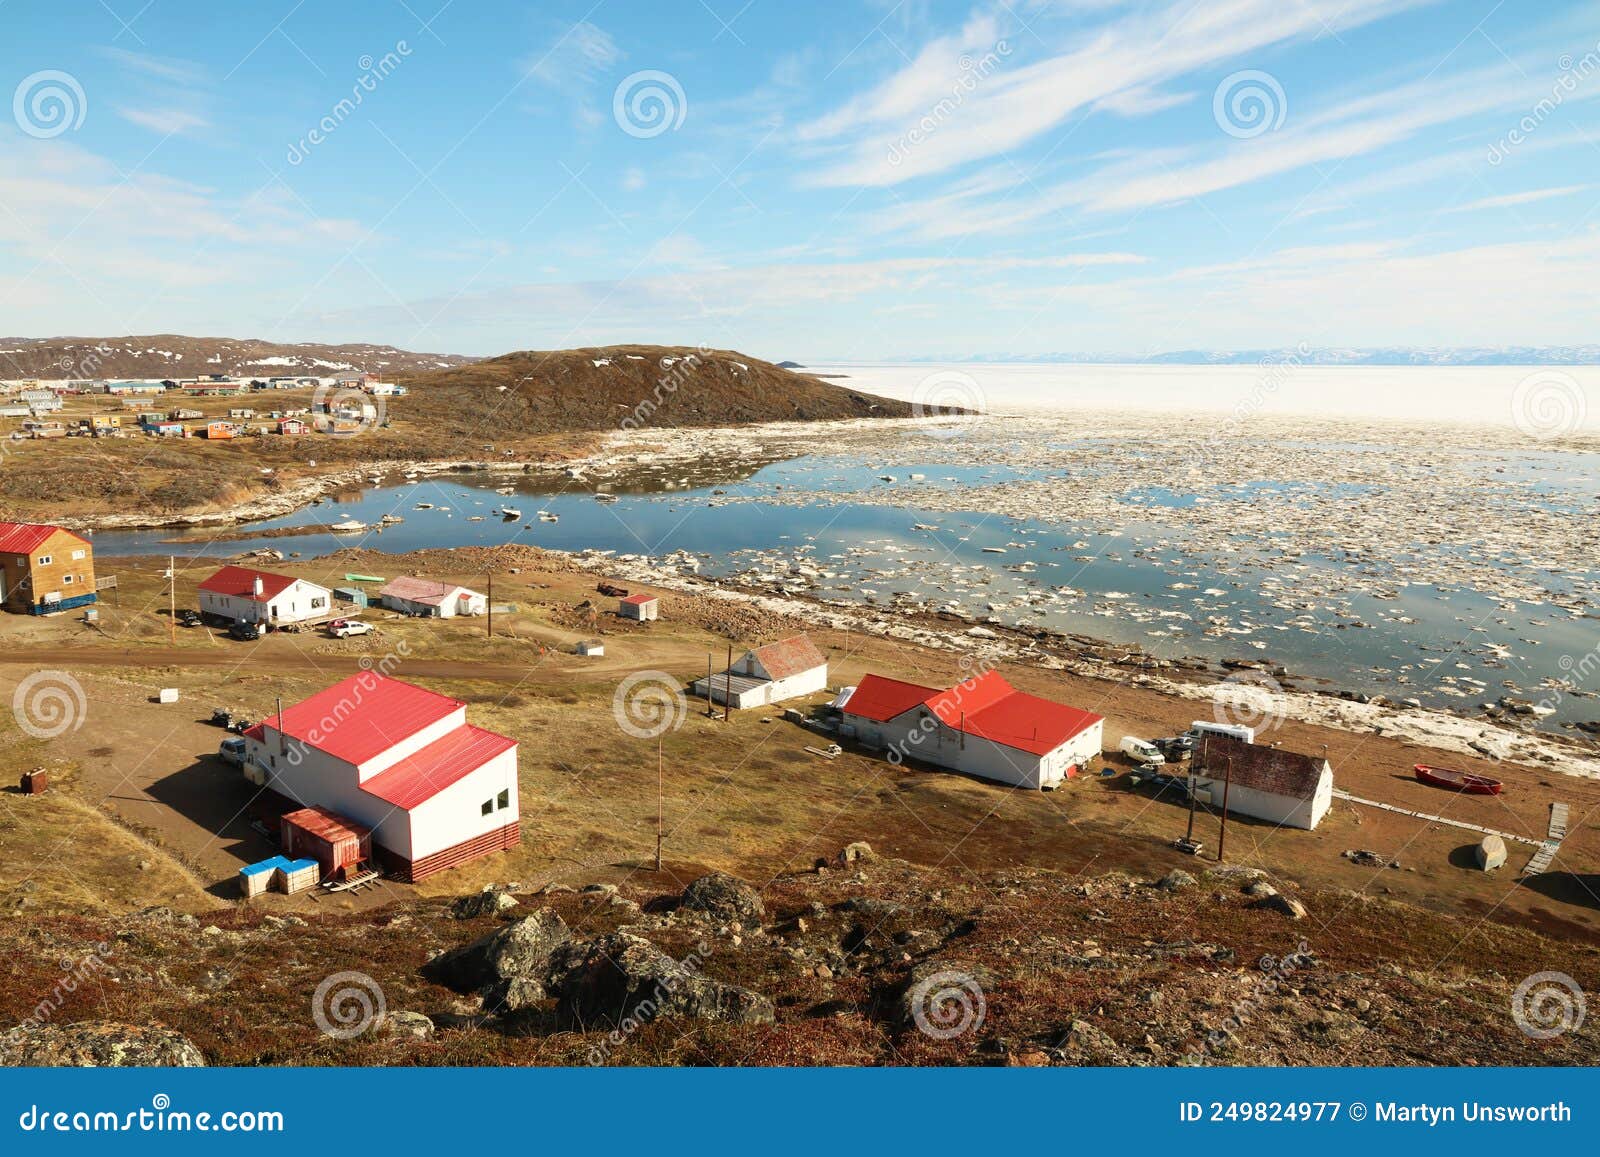 village of apex near iqaluit in nunavut, canada